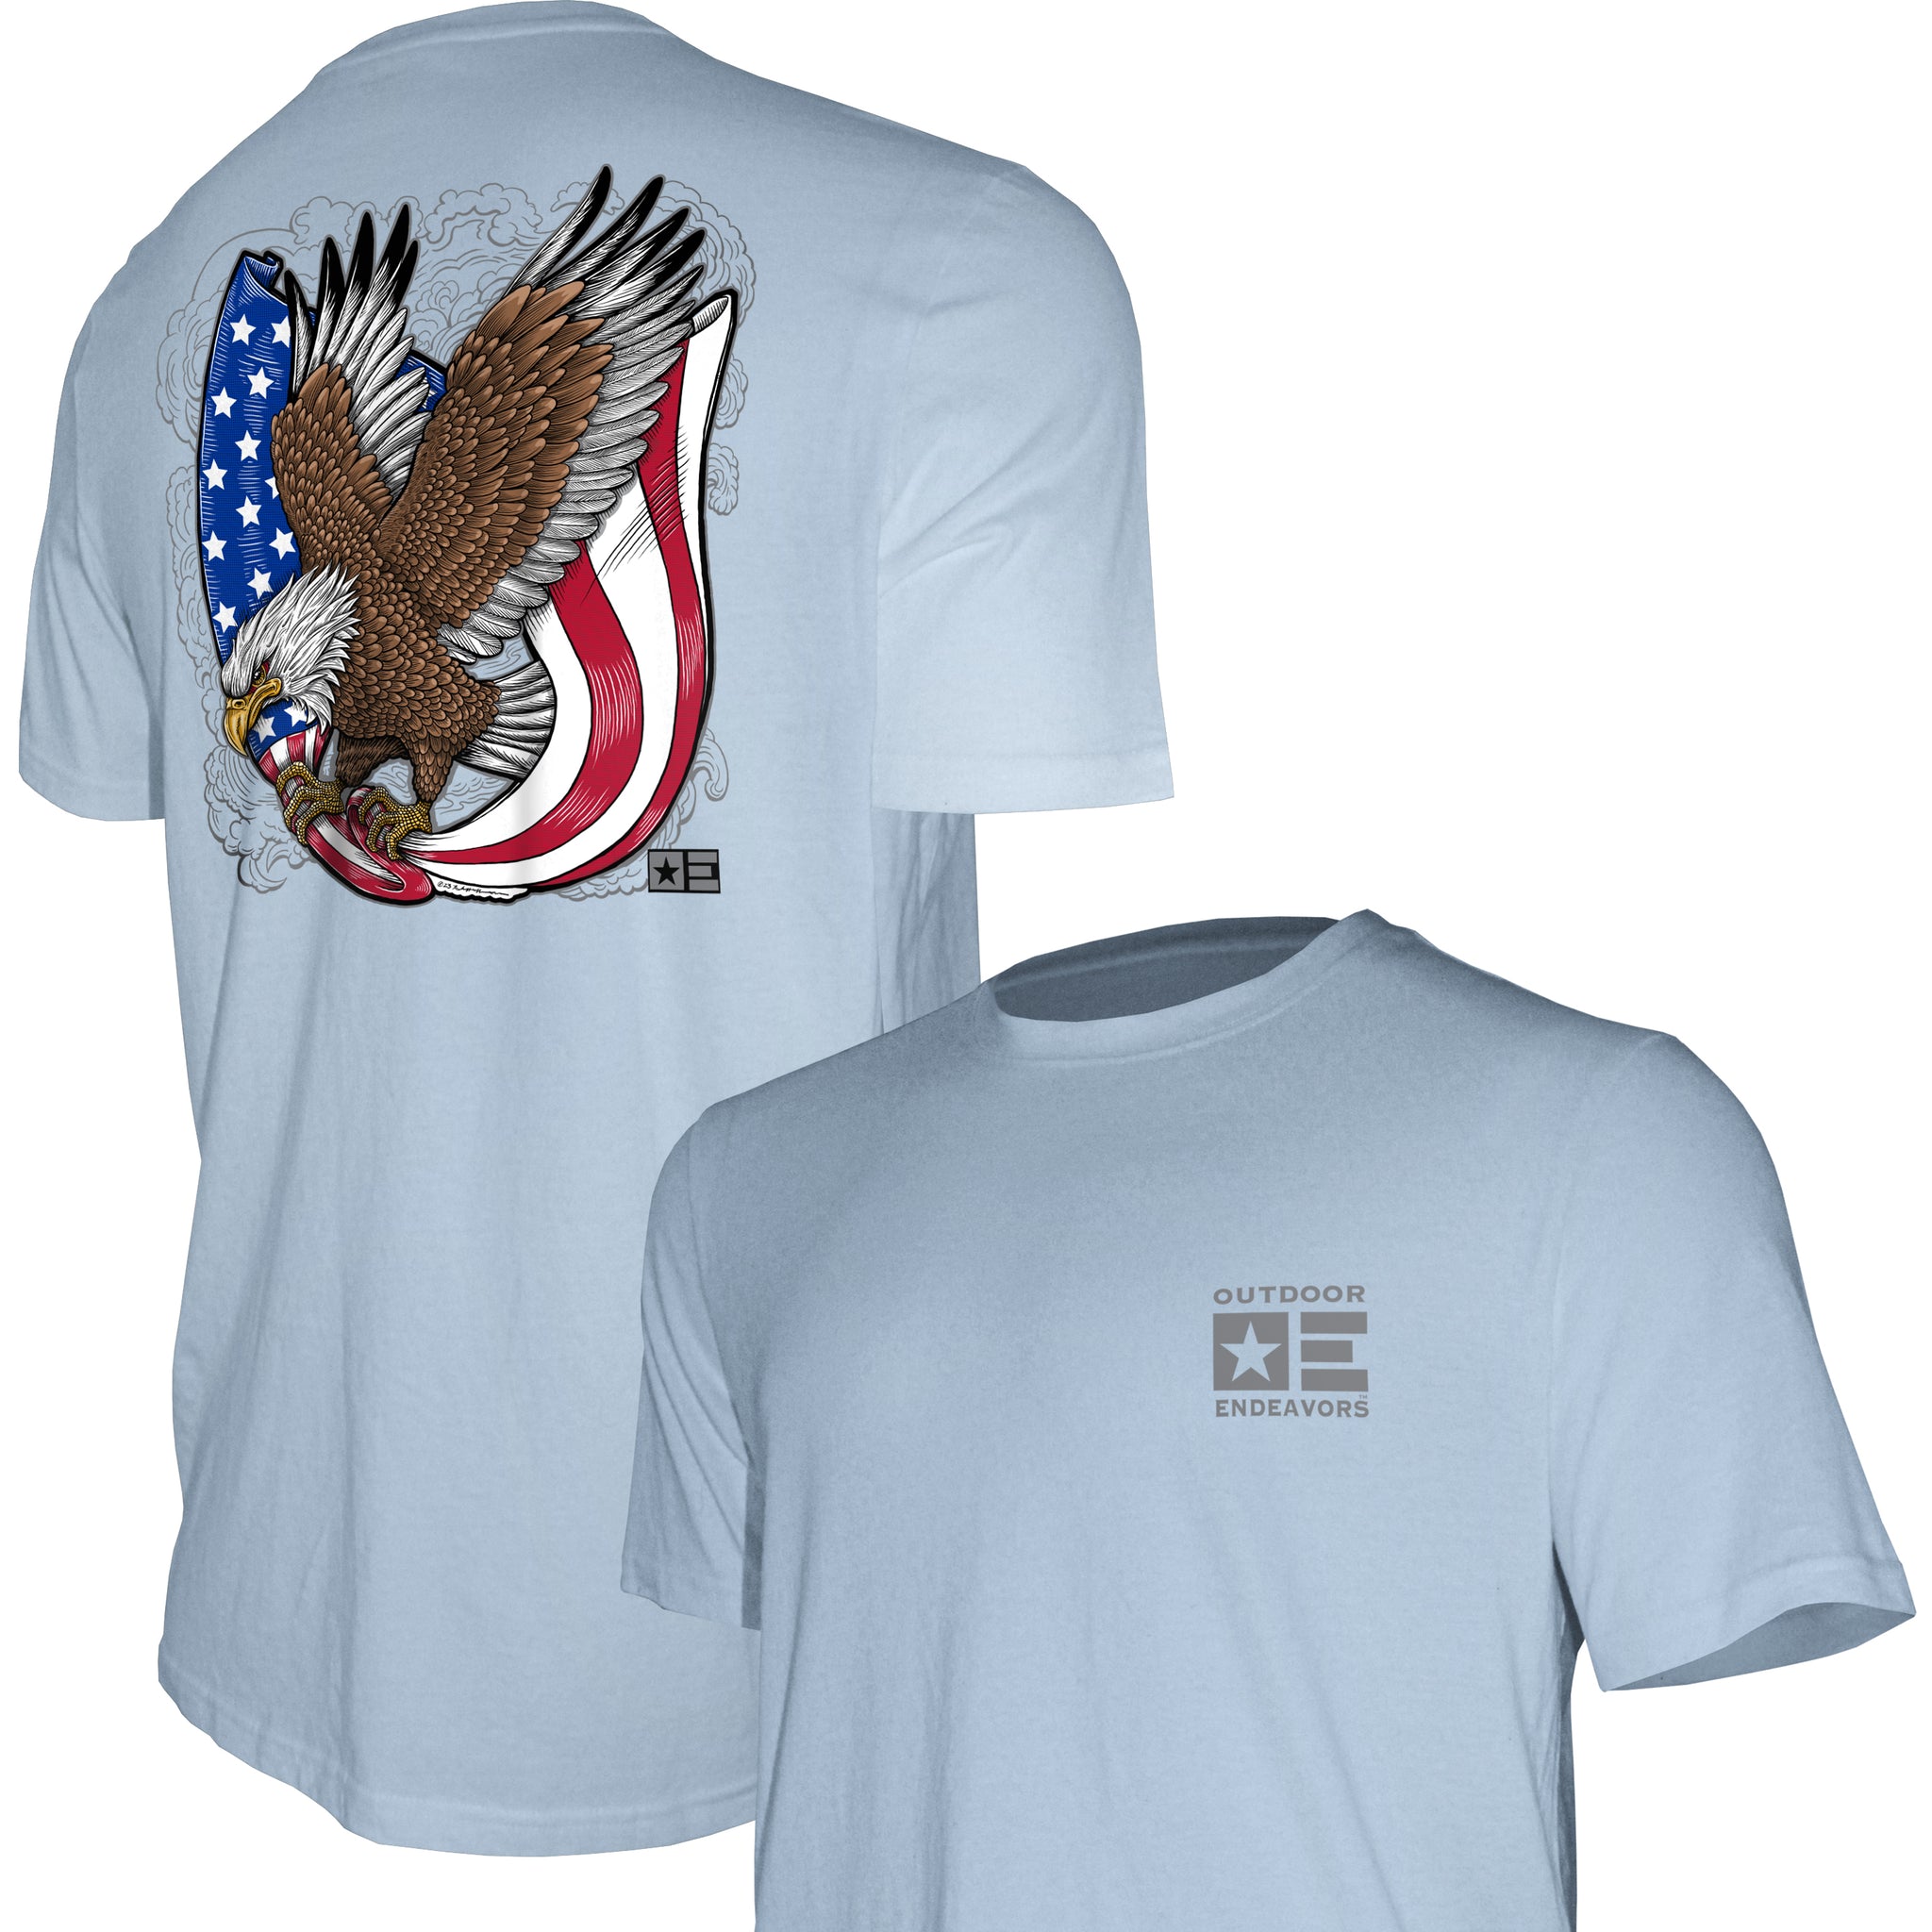 Outdoor Endeavors Patriotic - American Made Tee - Retro Tattoo Eagle